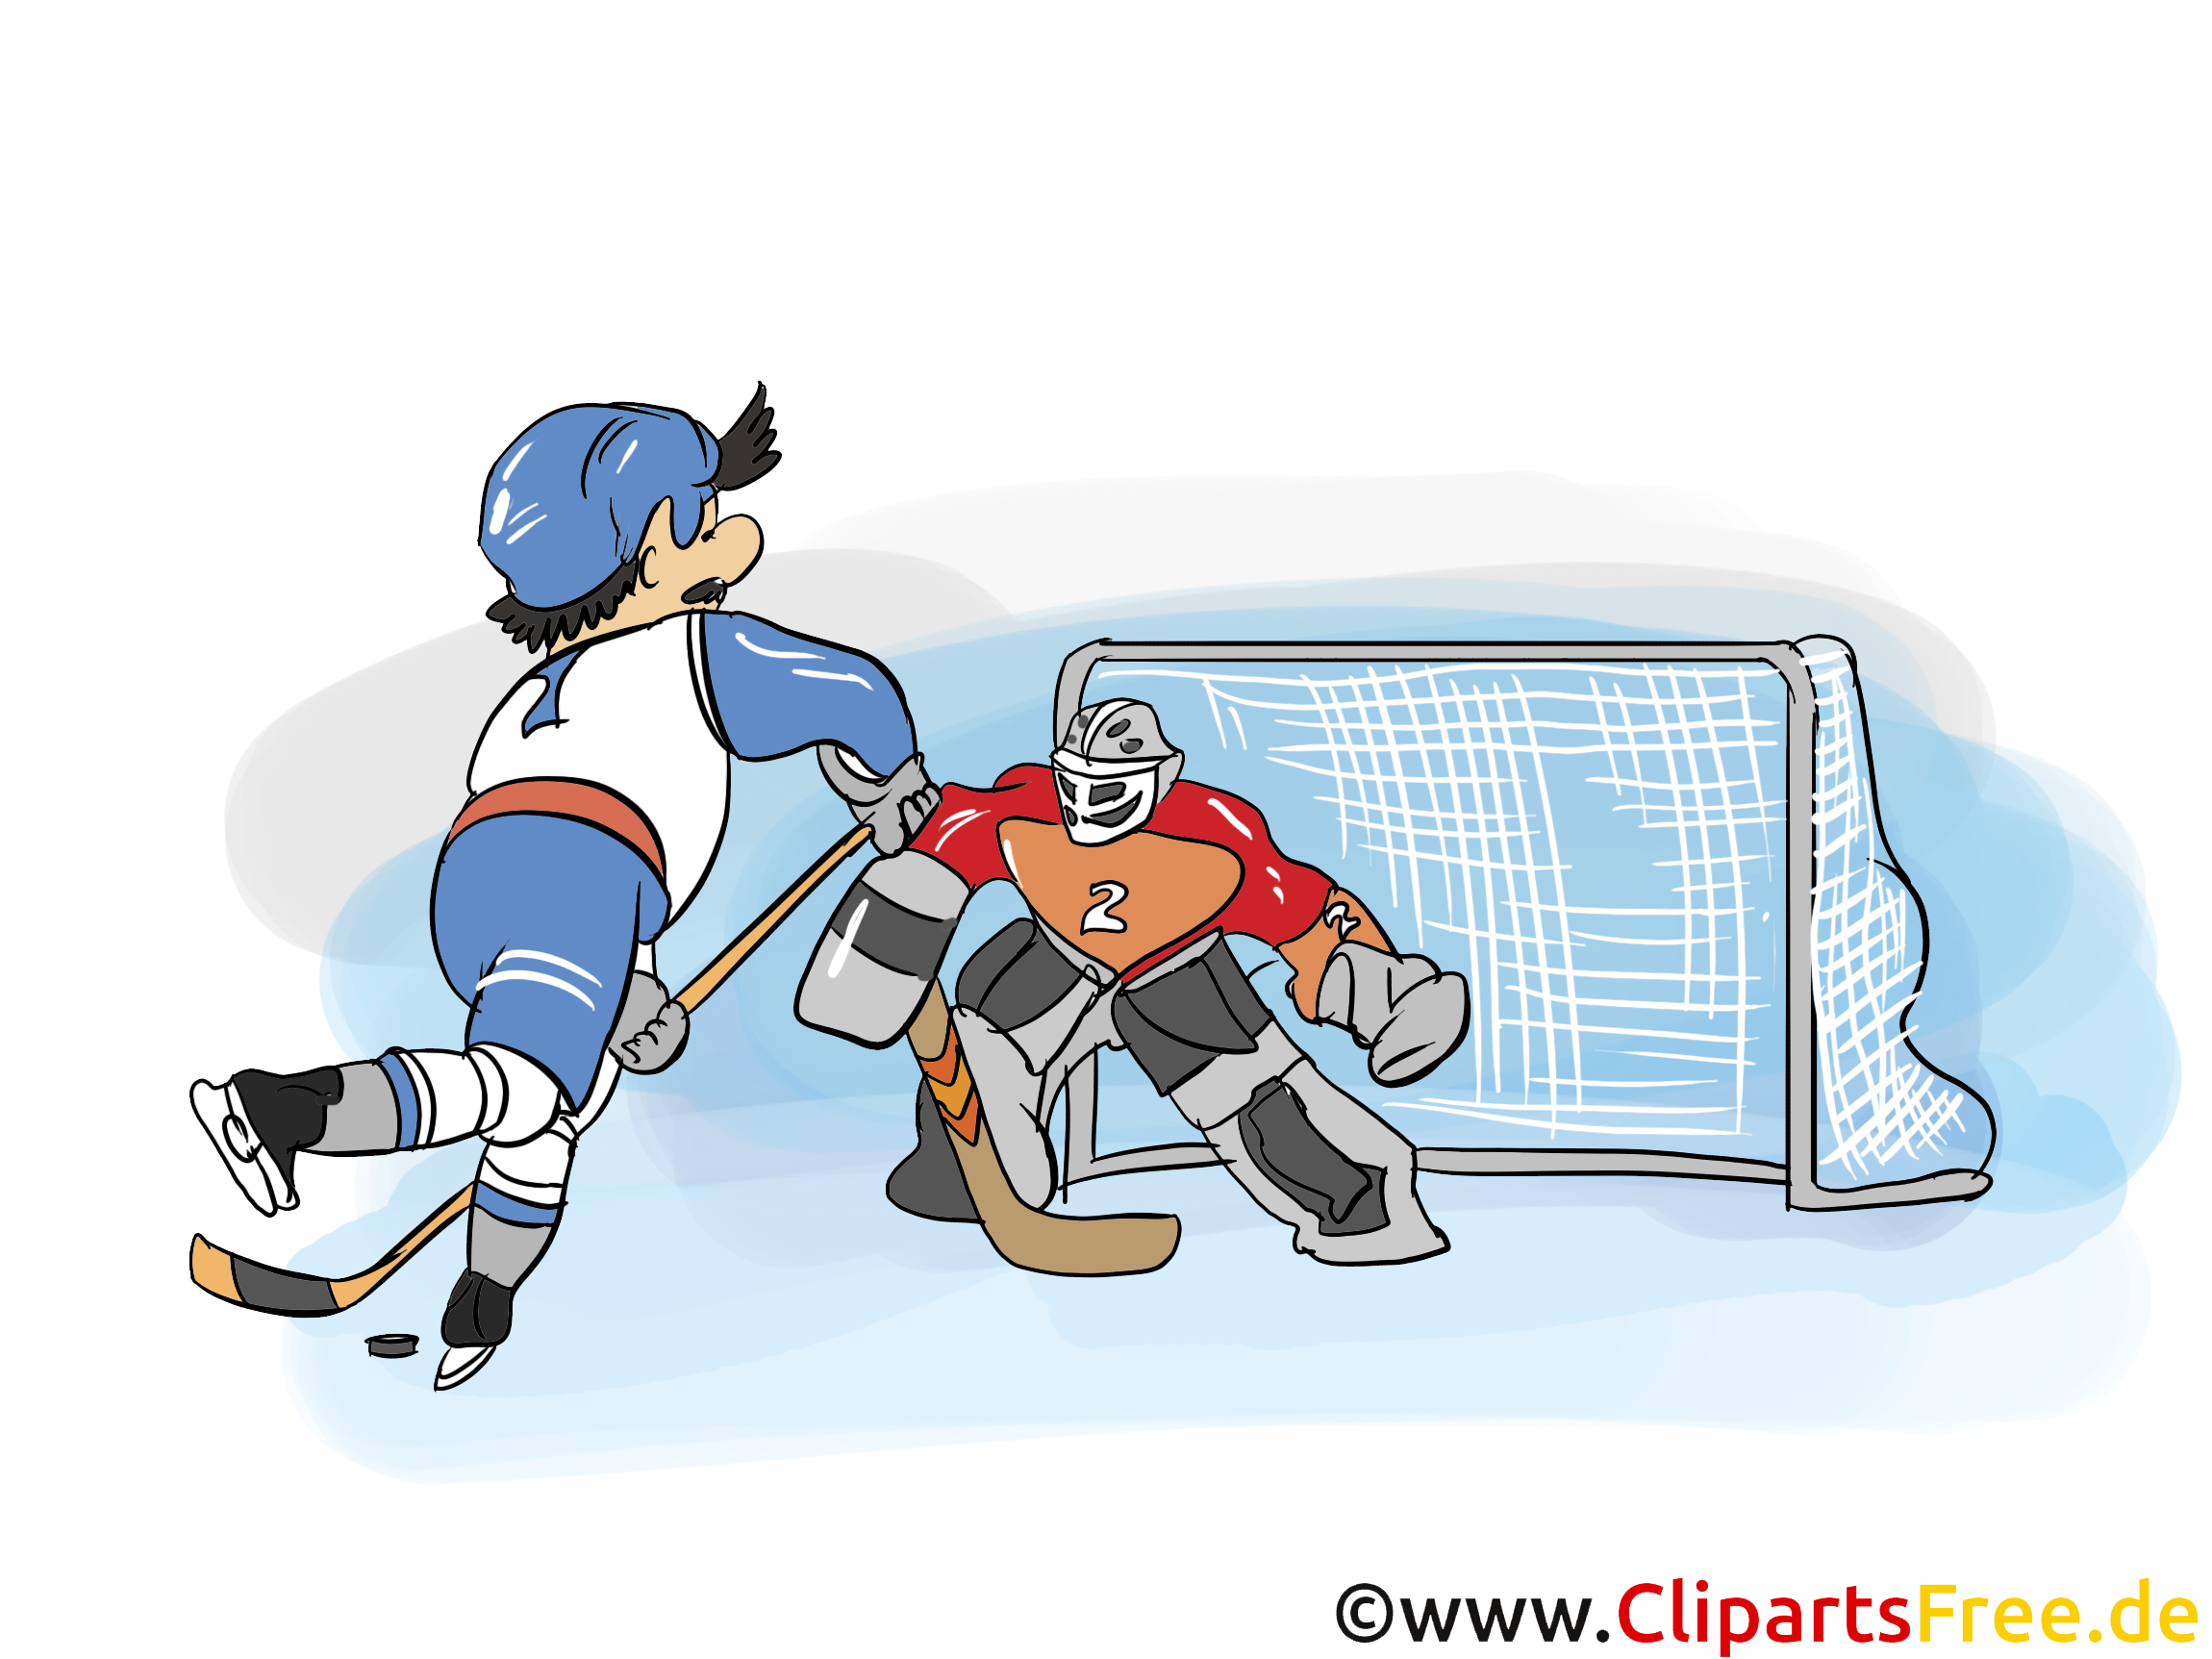 But clip arts gratuits - Hockey illustrations